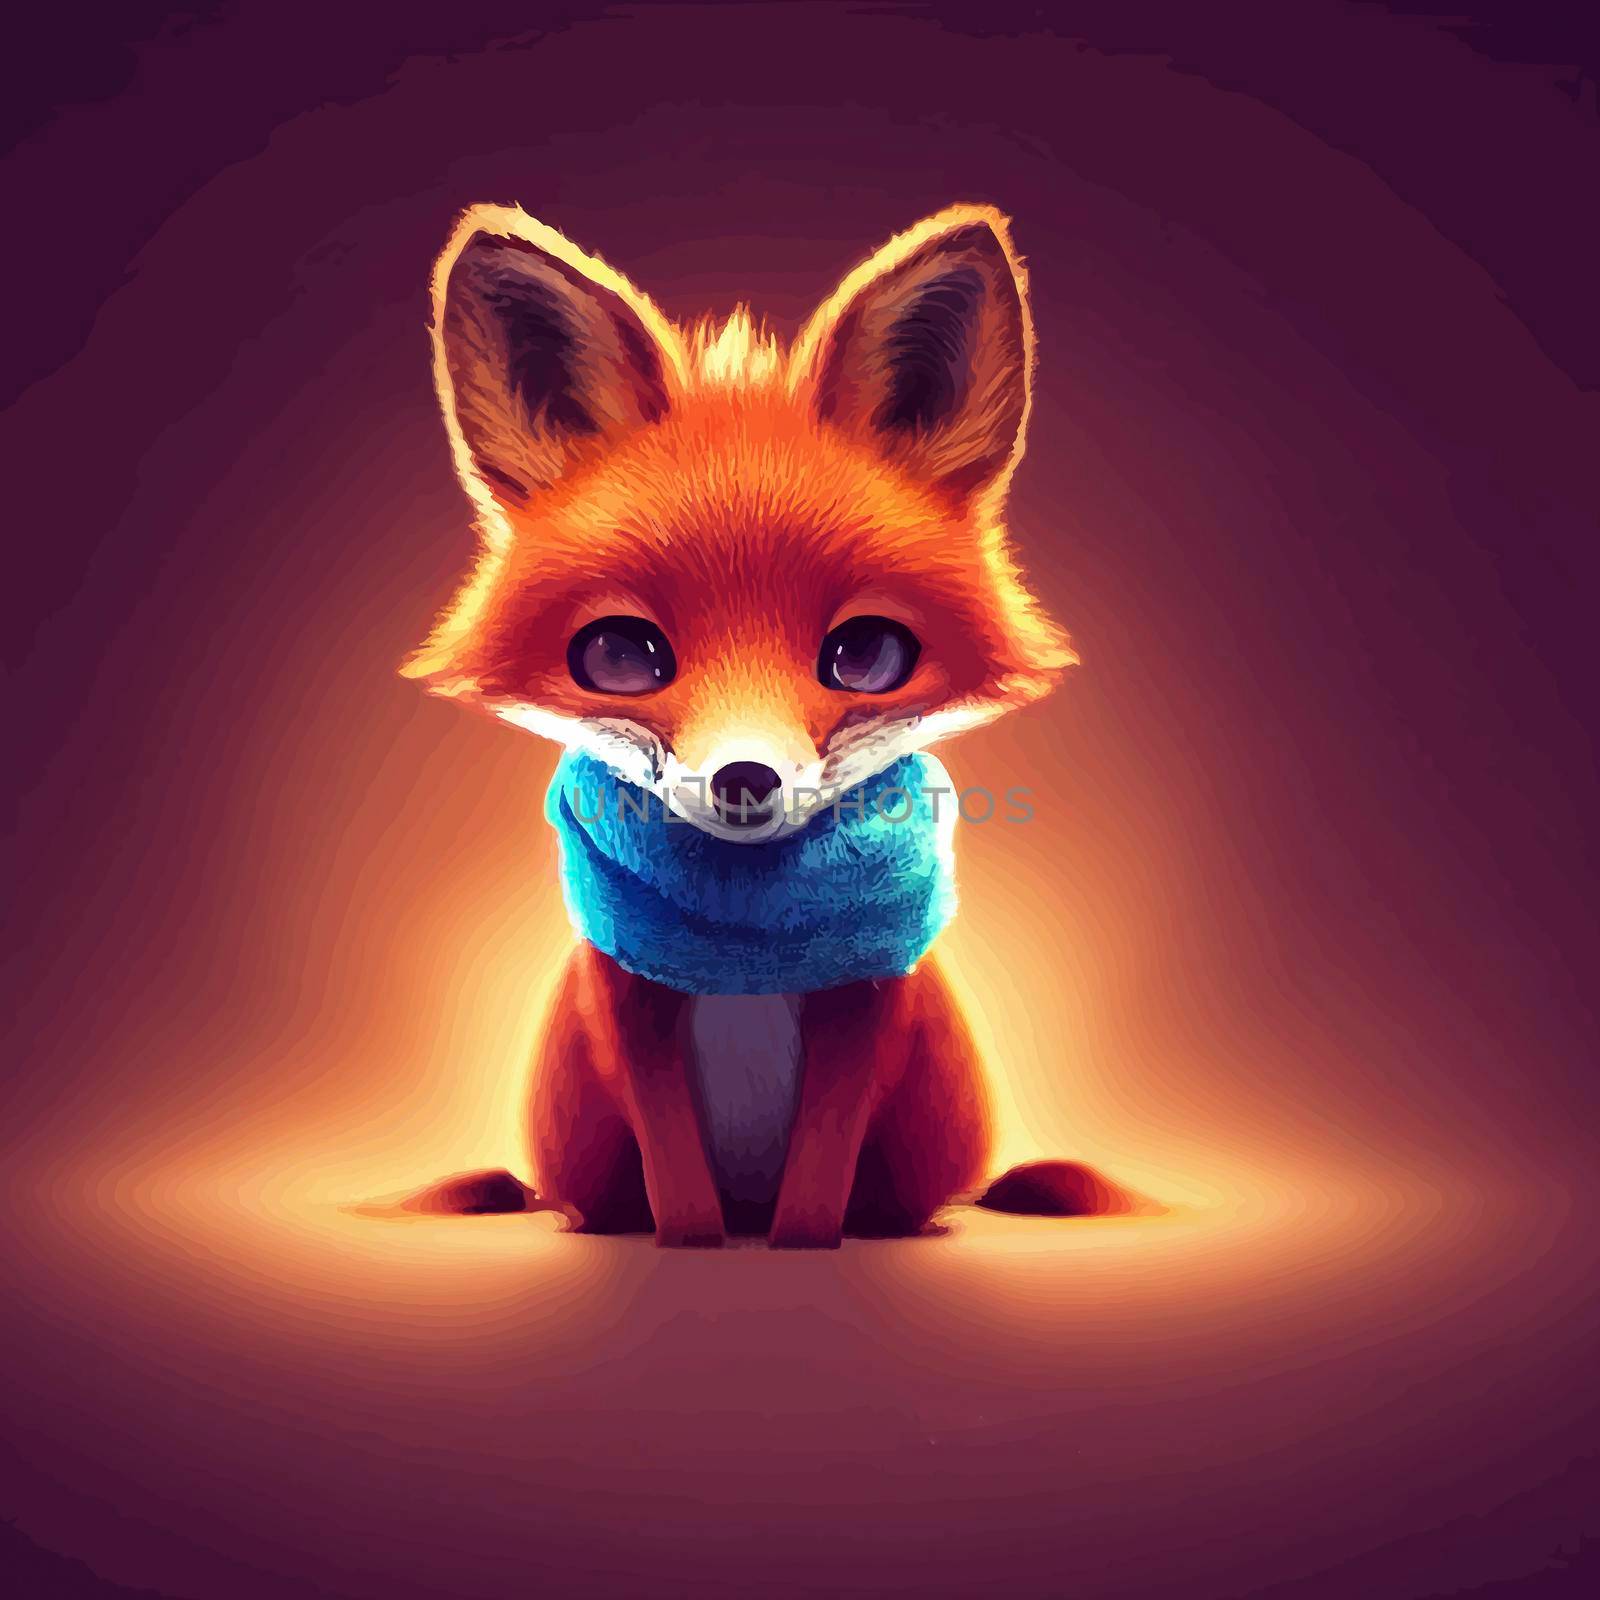 animated illustration of a cute fox, animated baby fox portrait by JpRamos